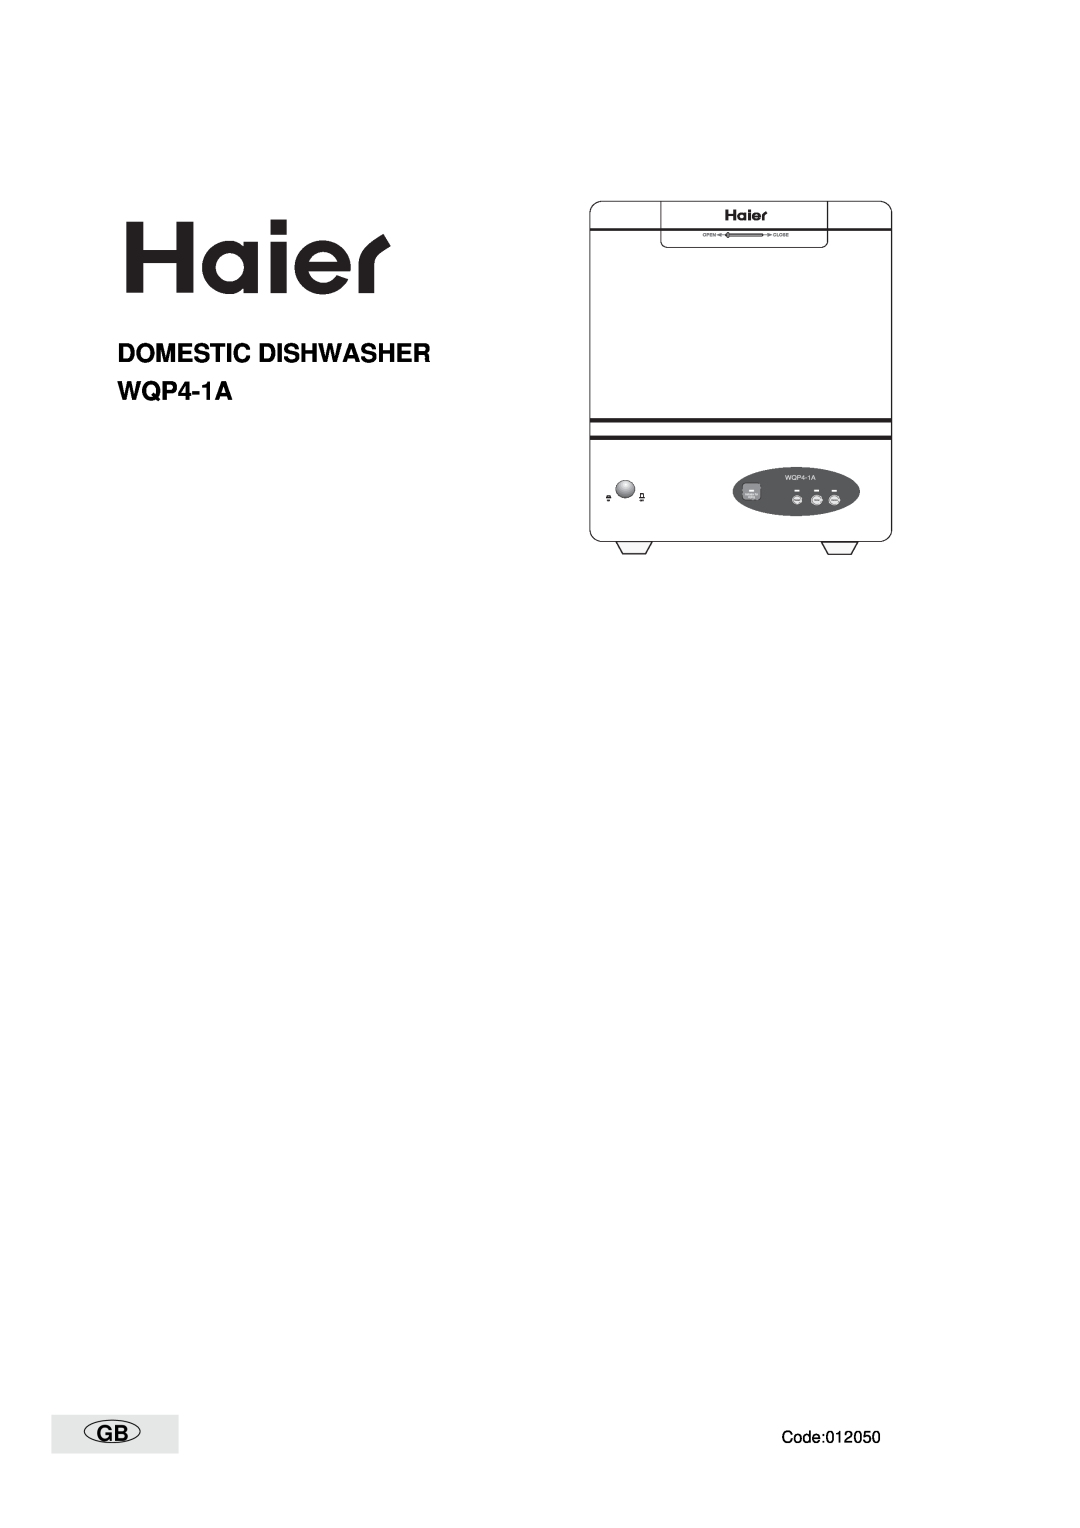 Haier manual DOMESTIC DISHWASHER WQP4-1A 